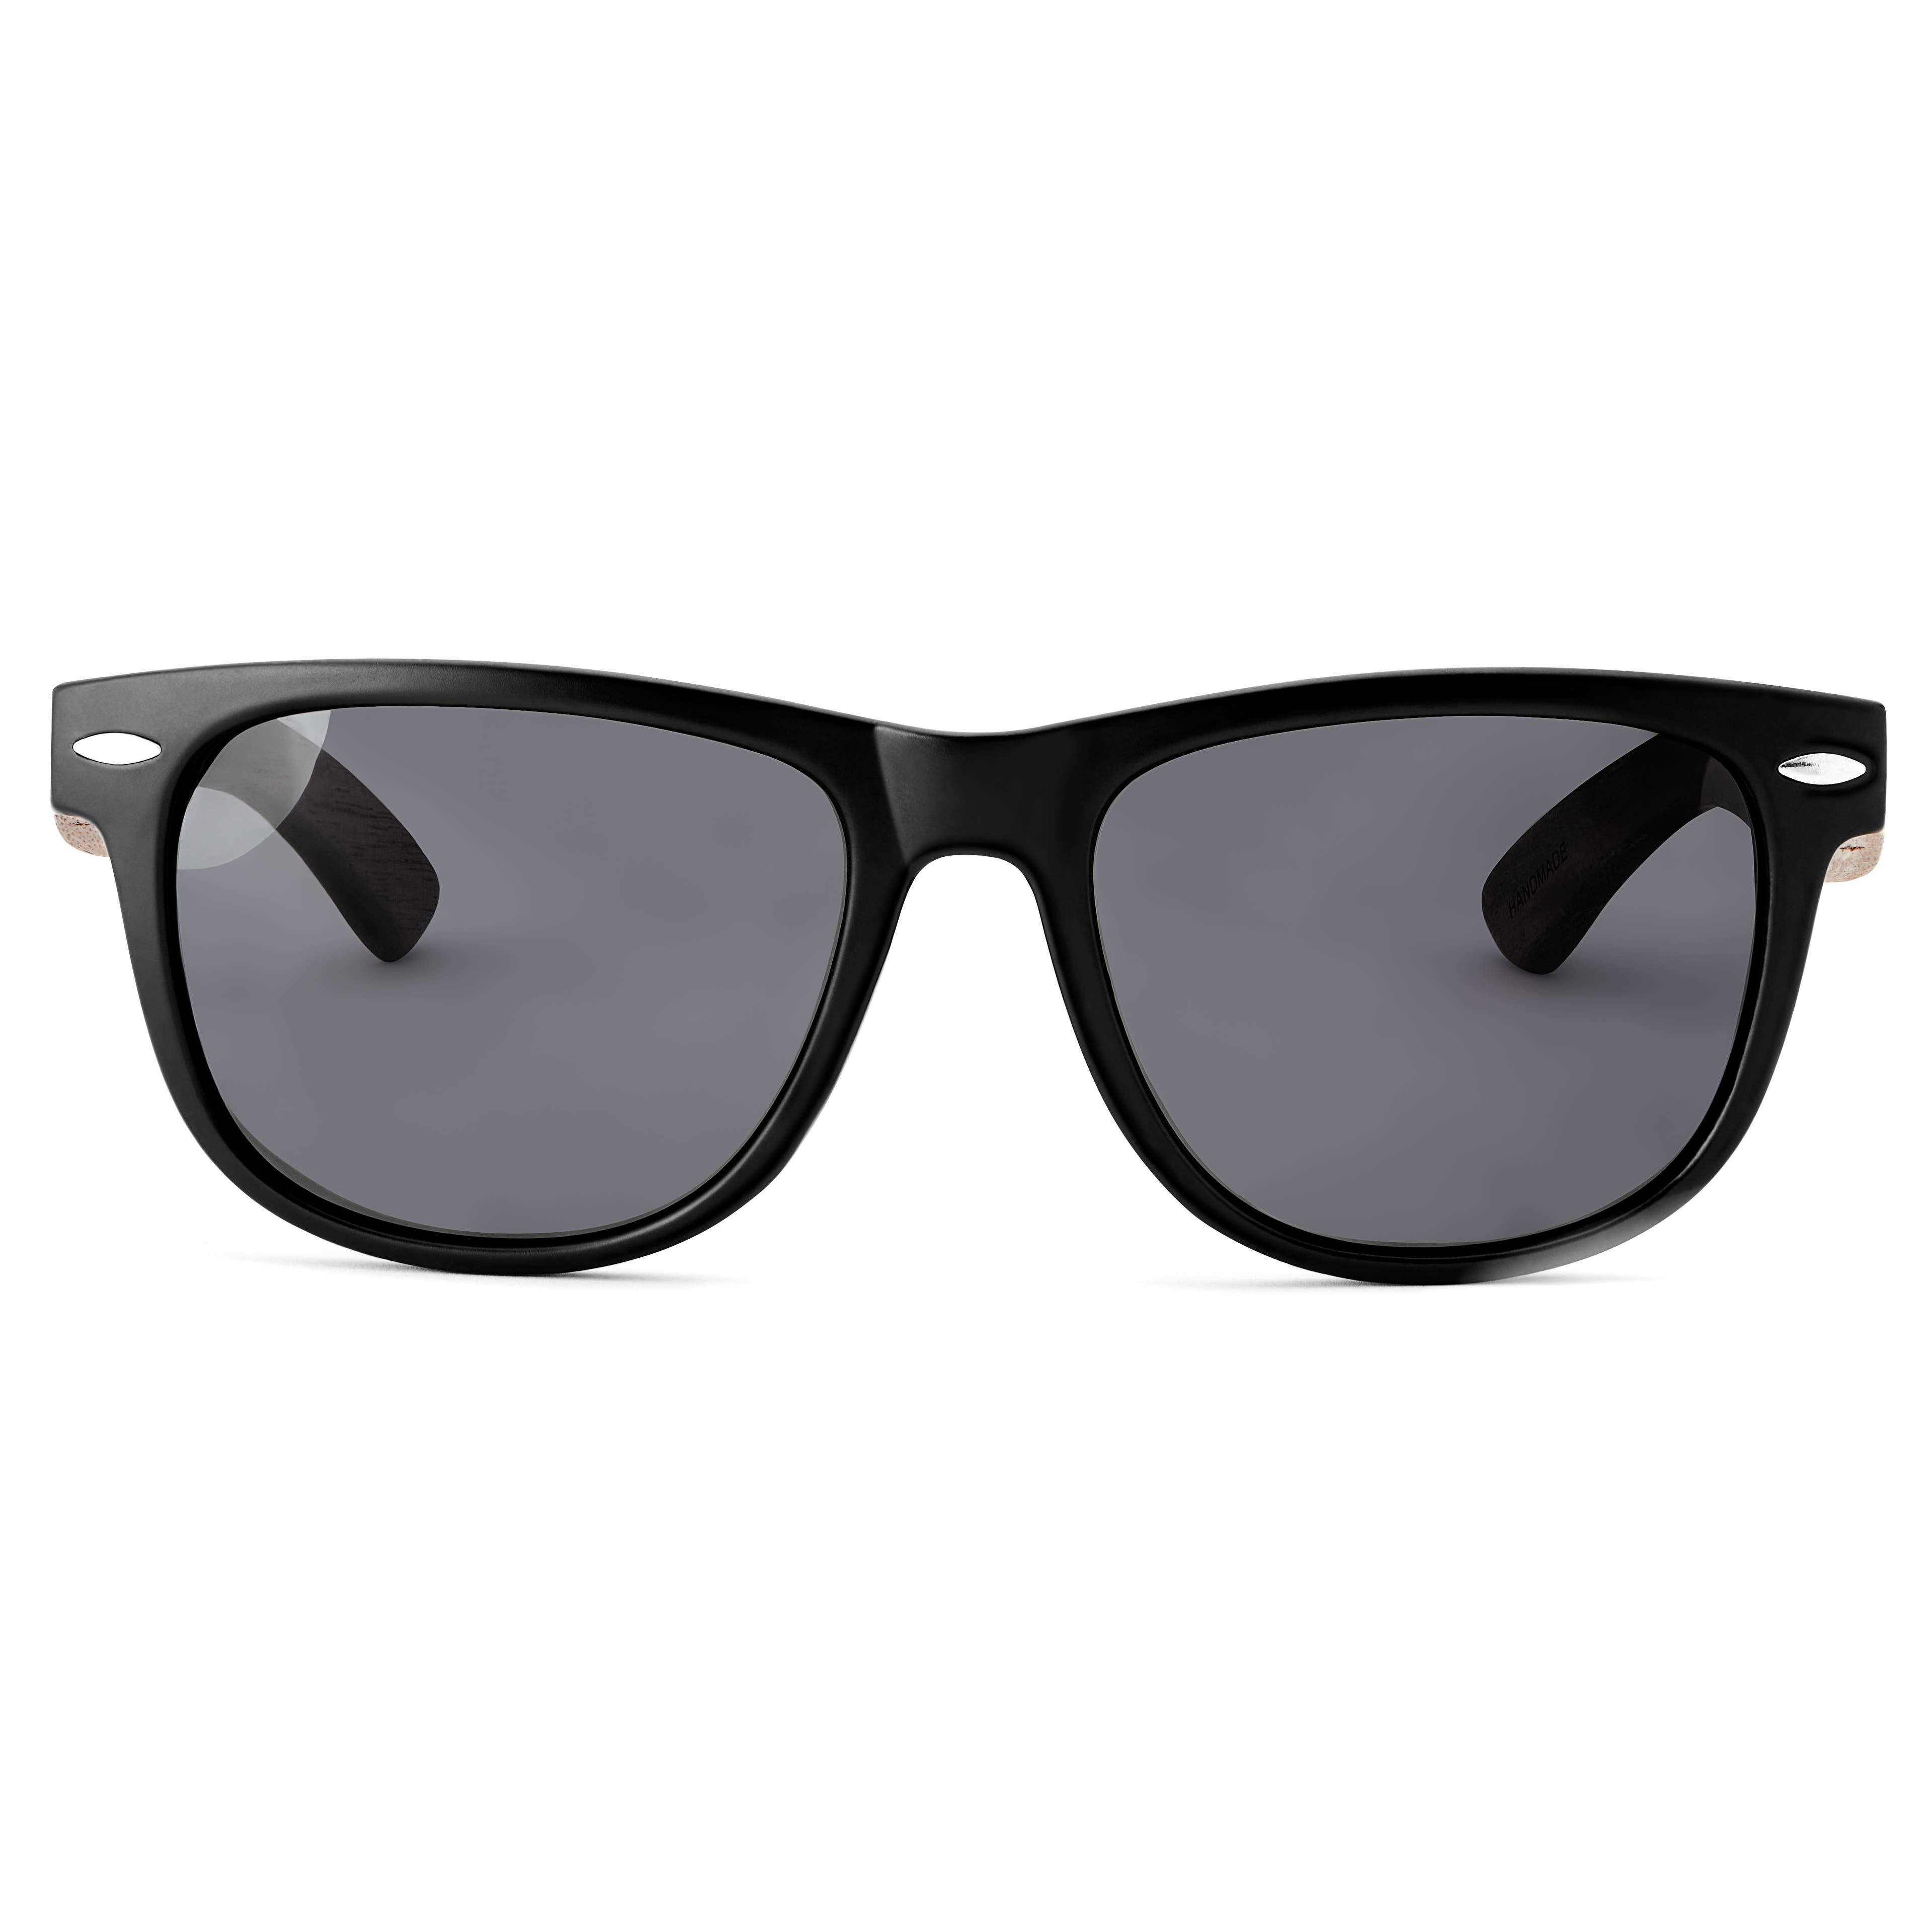 Black Retro Polarised Sunglasses With Wood Temples